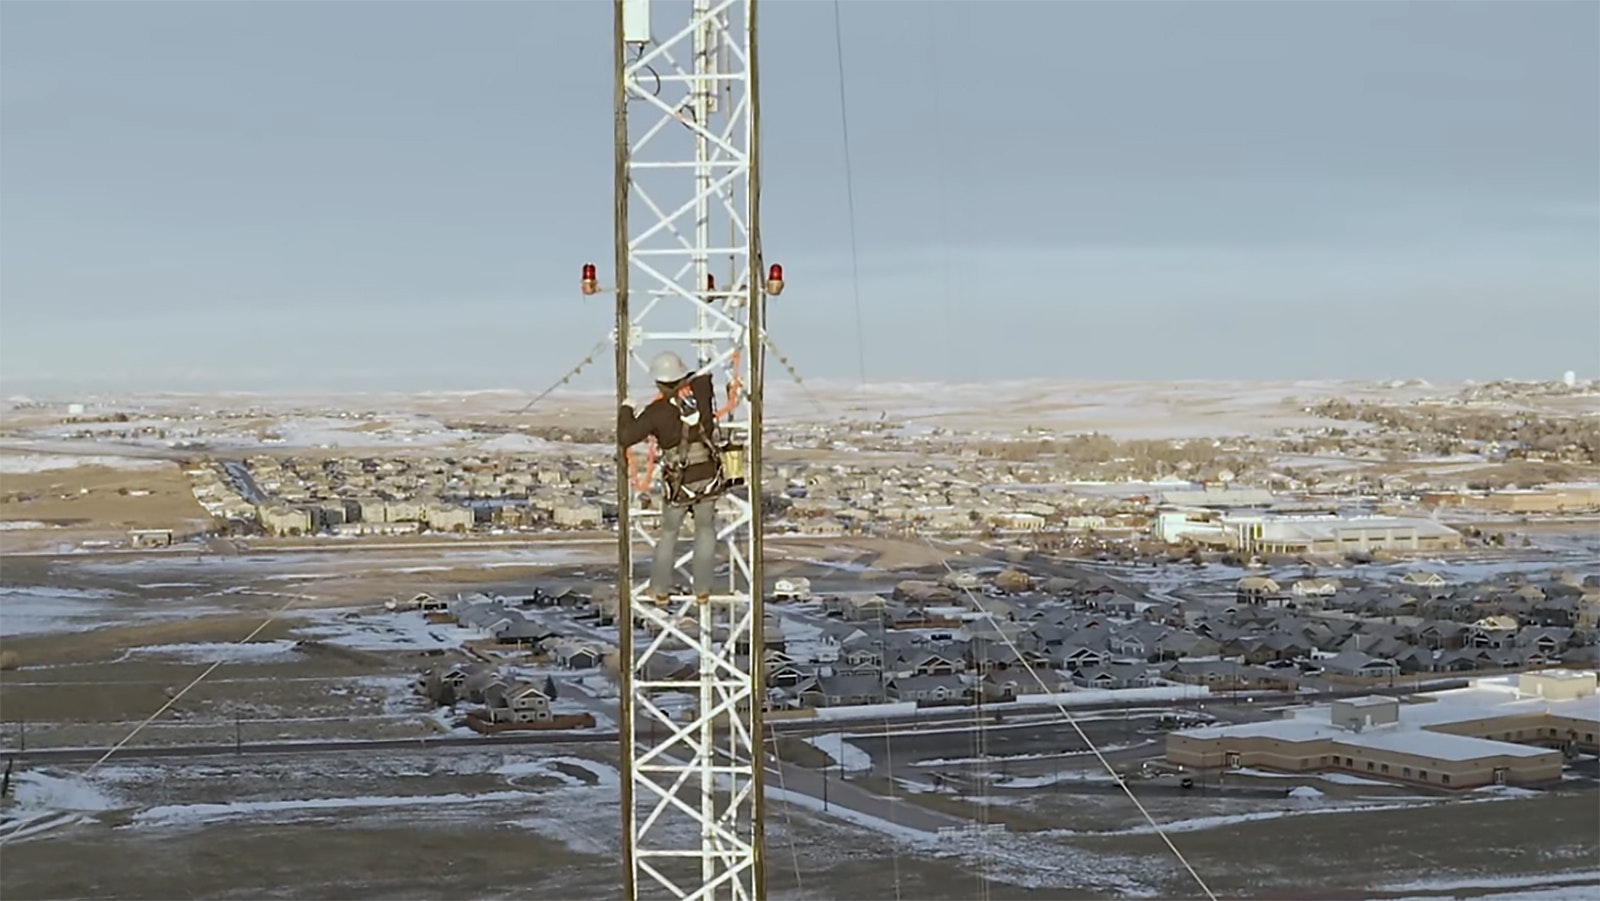 A Visionary Broadband technician climbs a communications tower.